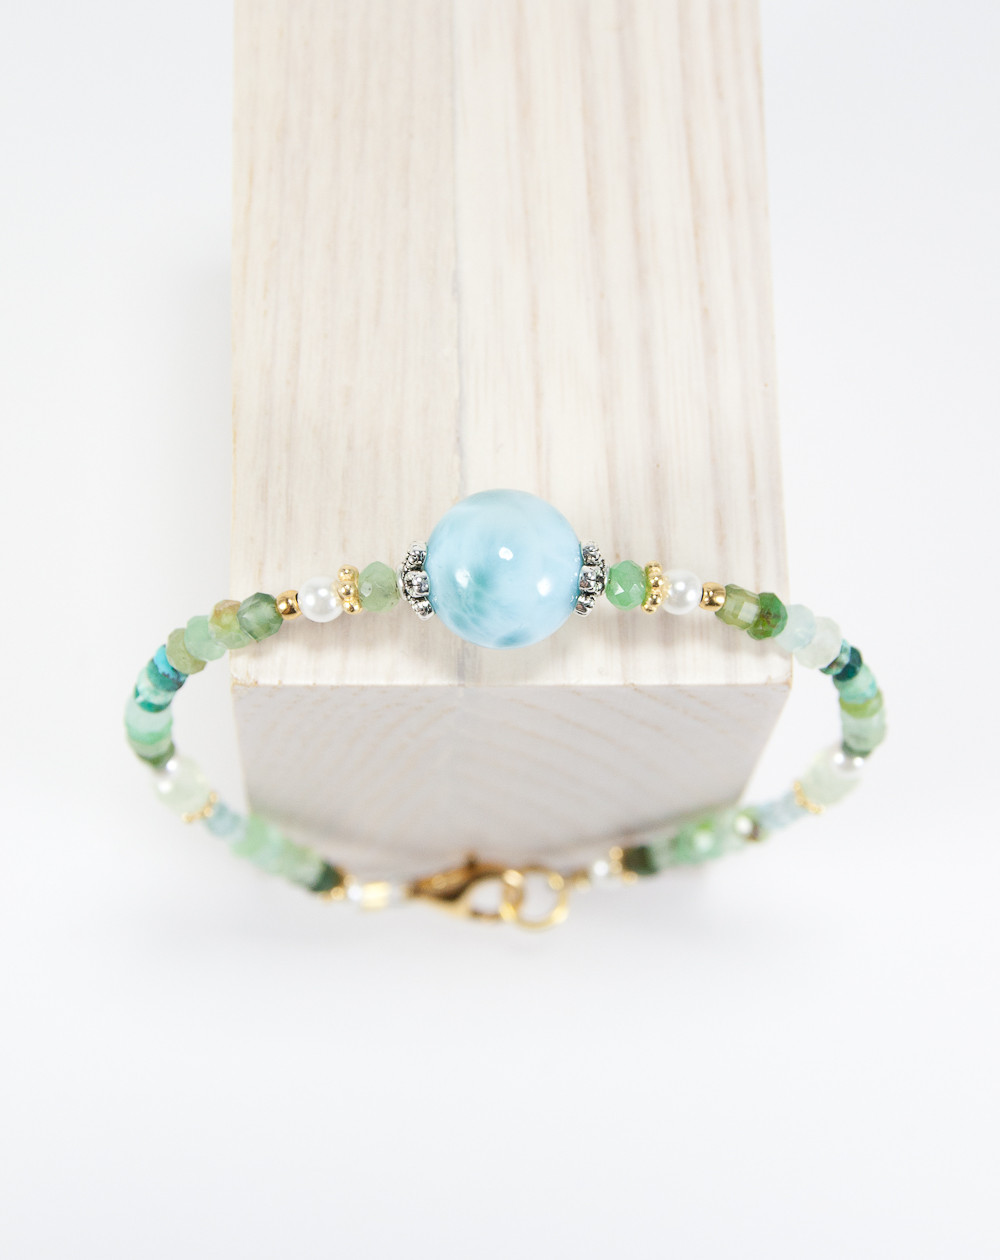 Bracelet simple Larimar, Turquoise, Chrysoprase, Perles, Apatite, Préhnite, Jade. Sanùk Création, Bayonne